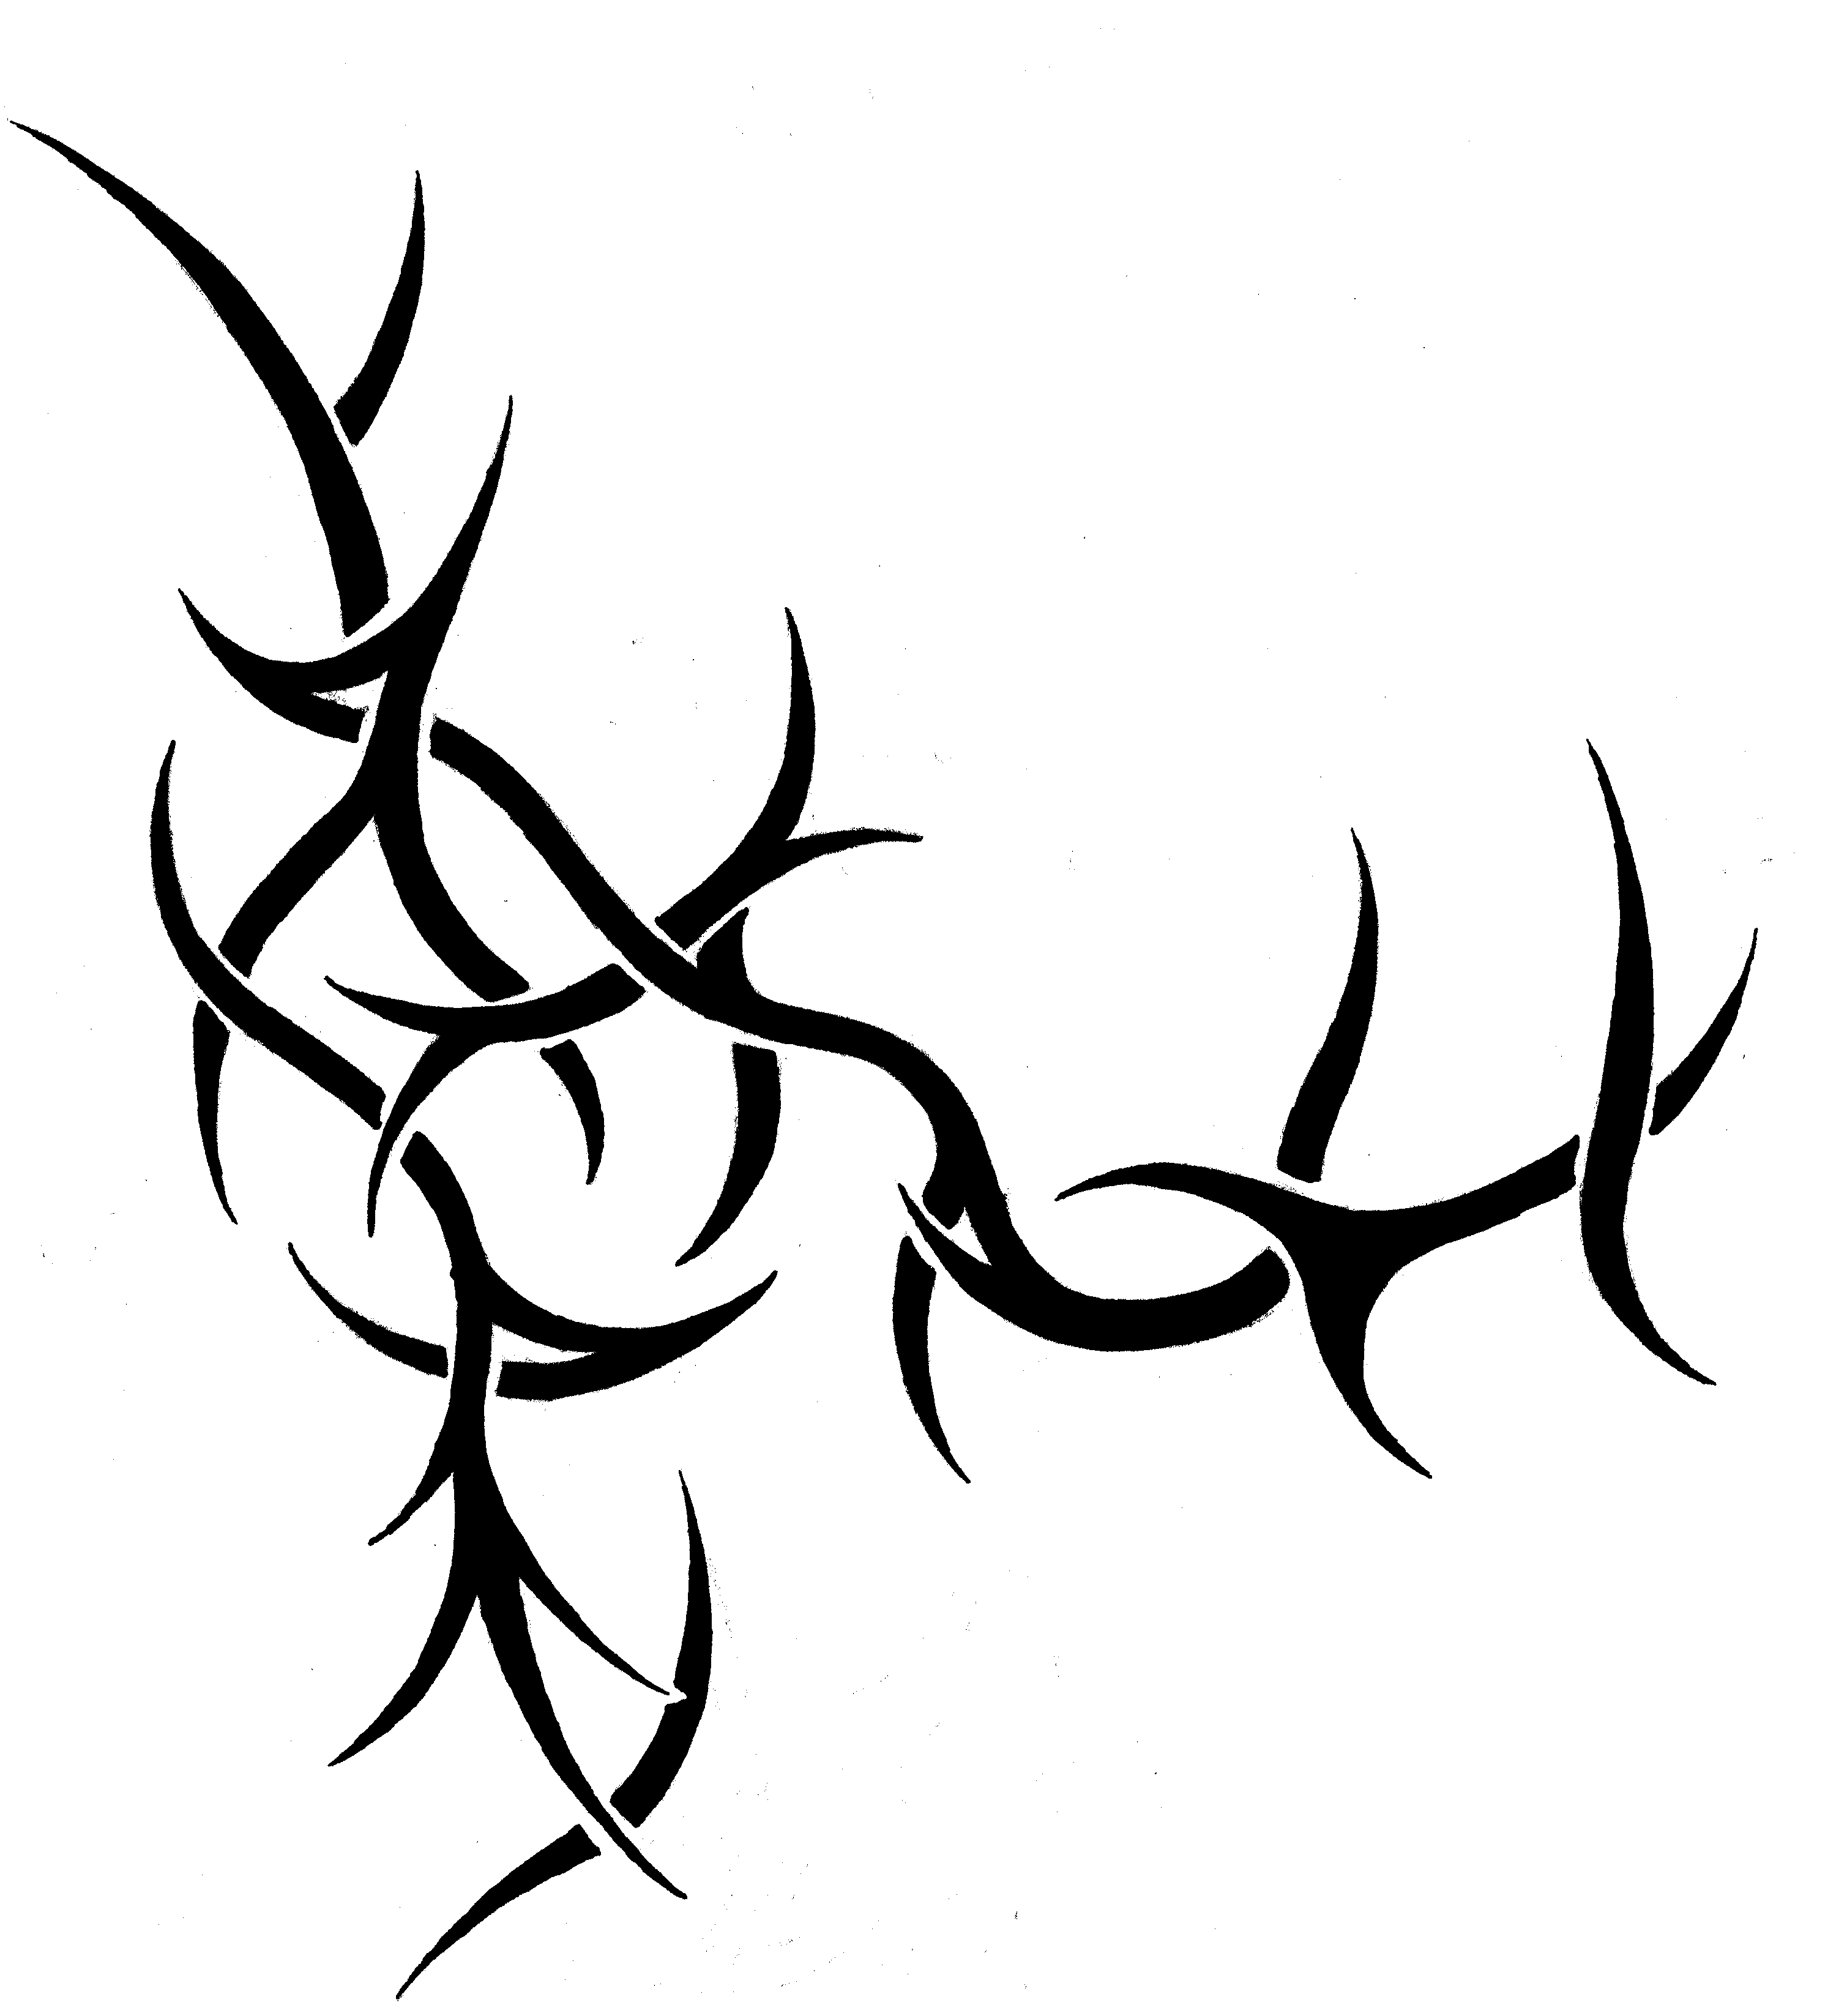 Thorn designs tattoos.